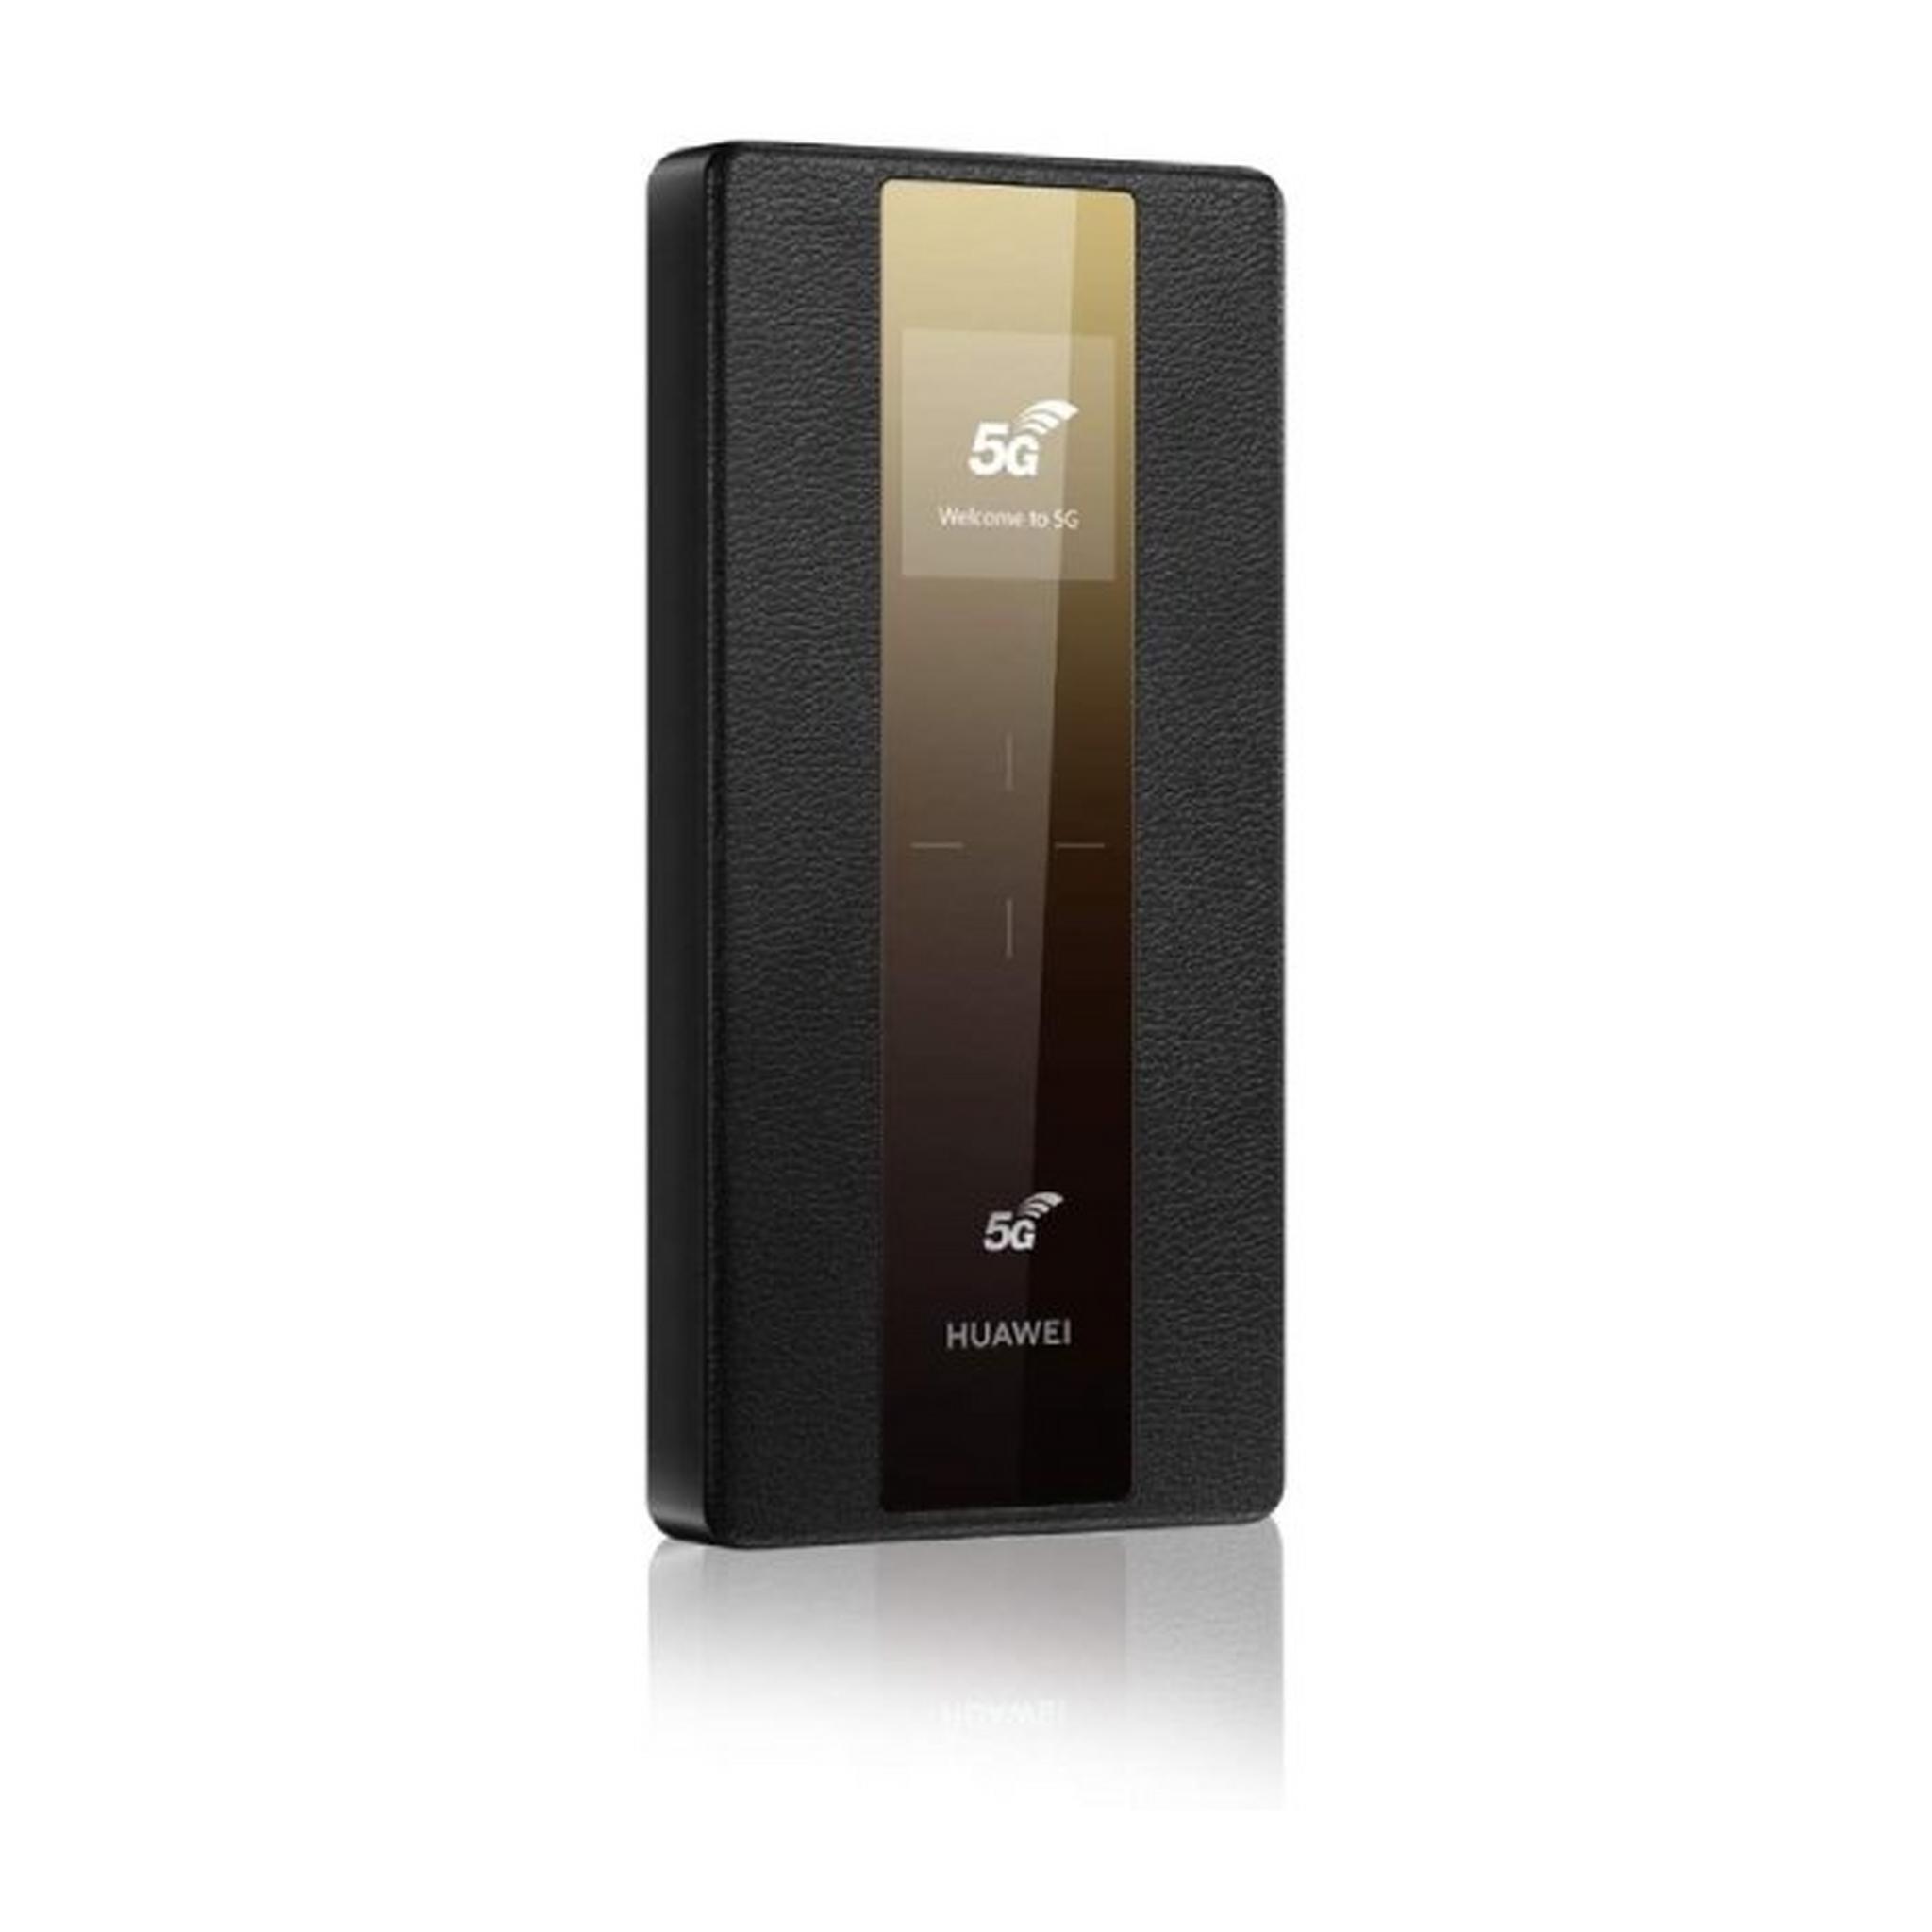 Huawei 5G Mobile WiFi Pro, E6878-370 - Black